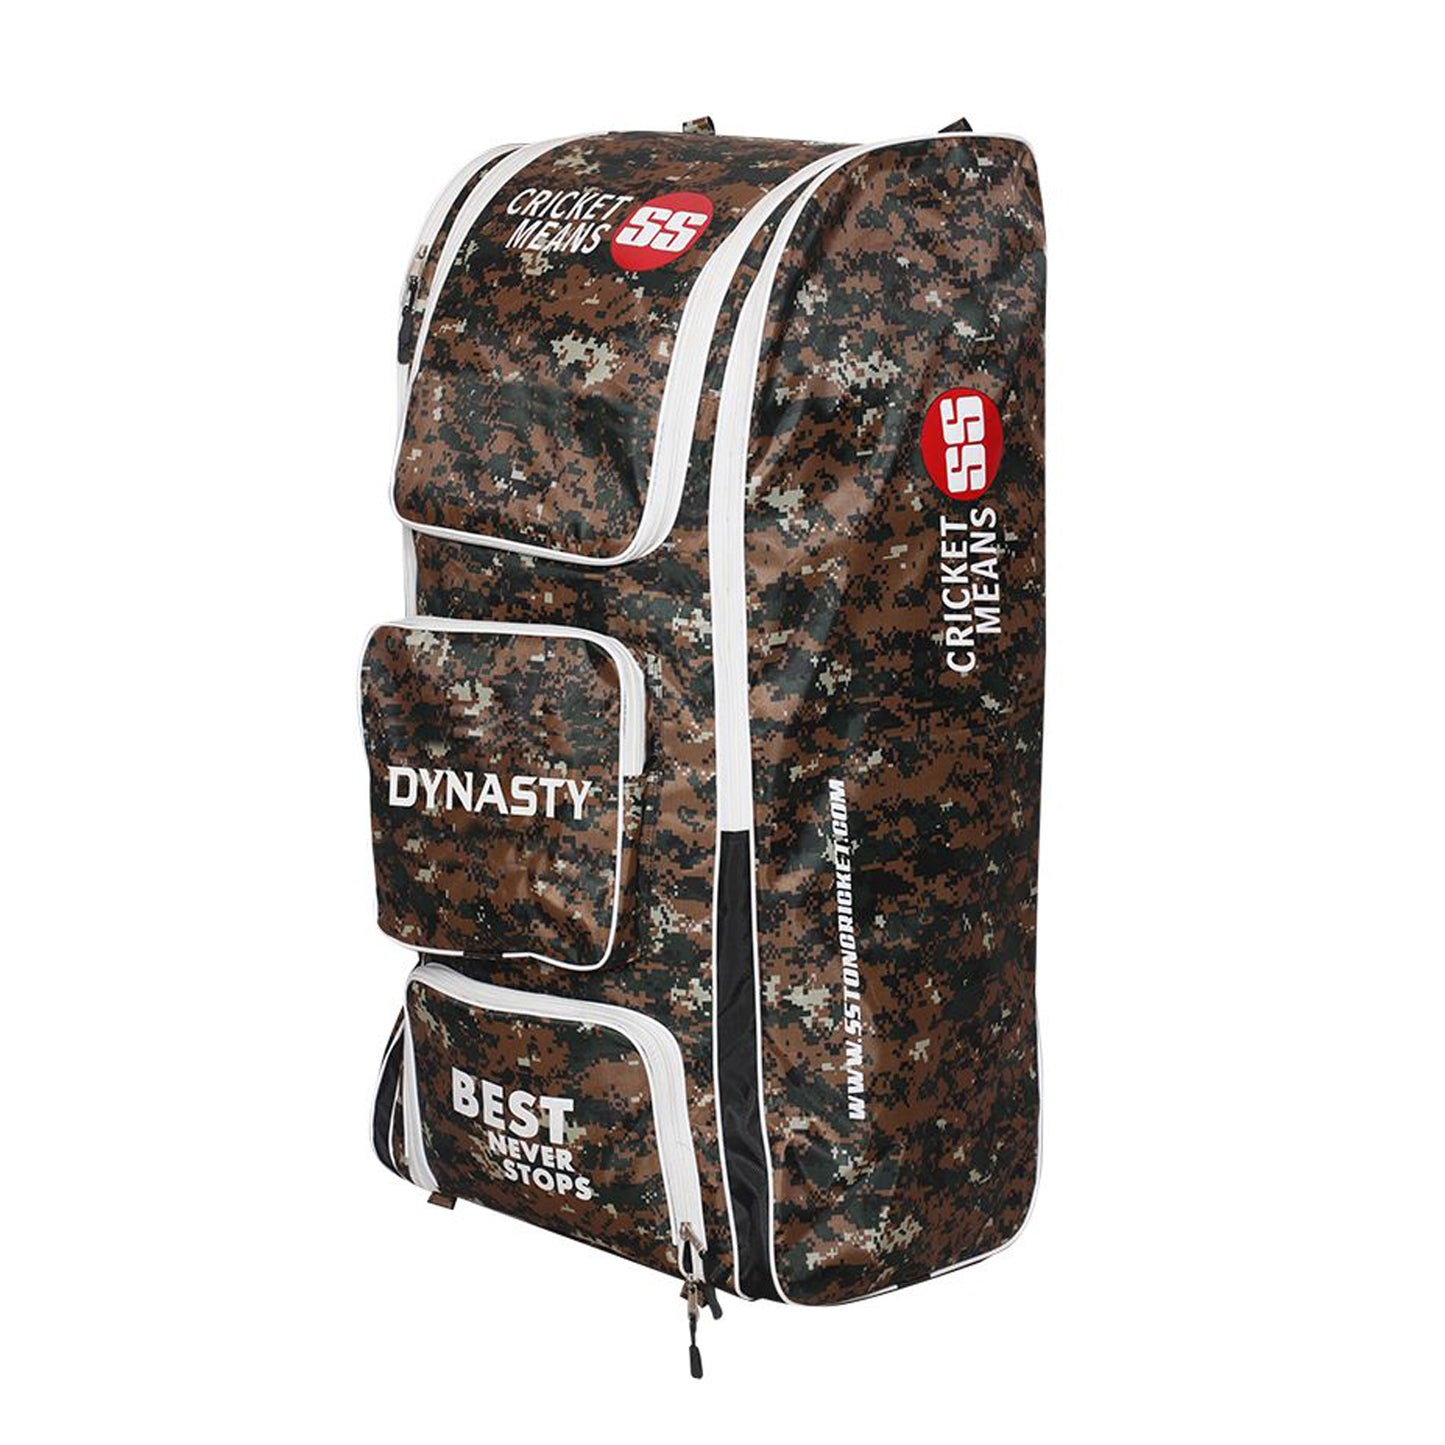 SS Dynasty Duffle CamoFlage Cricket Kit Bag - Best Price online Prokicksports.com